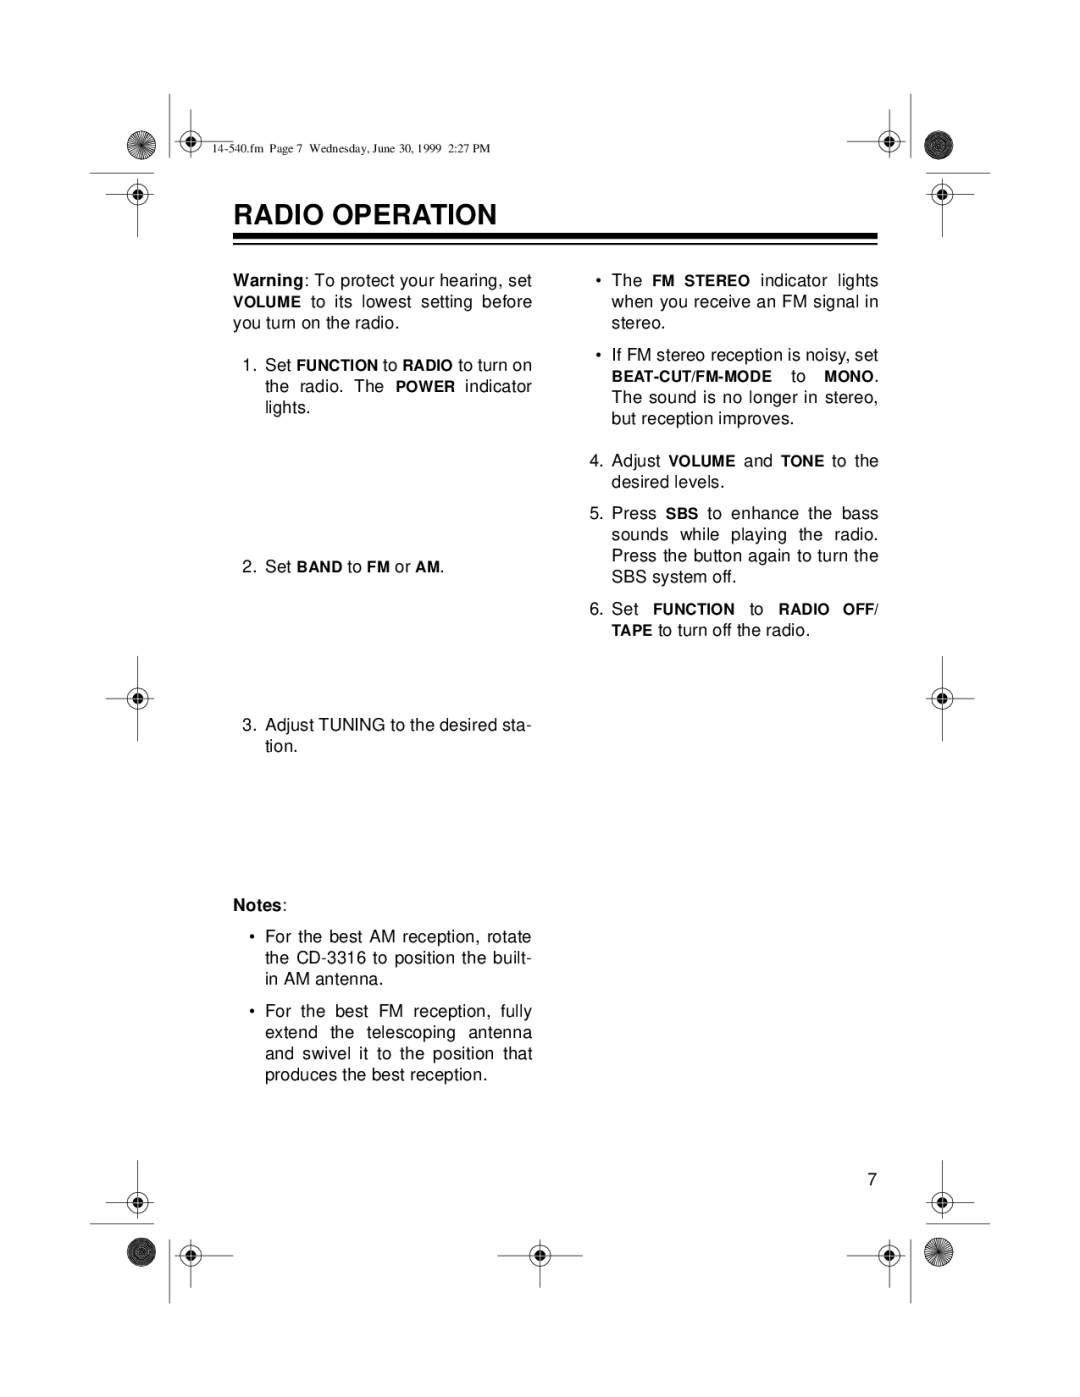 Radio Shack CD-3316 owner manual Radio Operation 